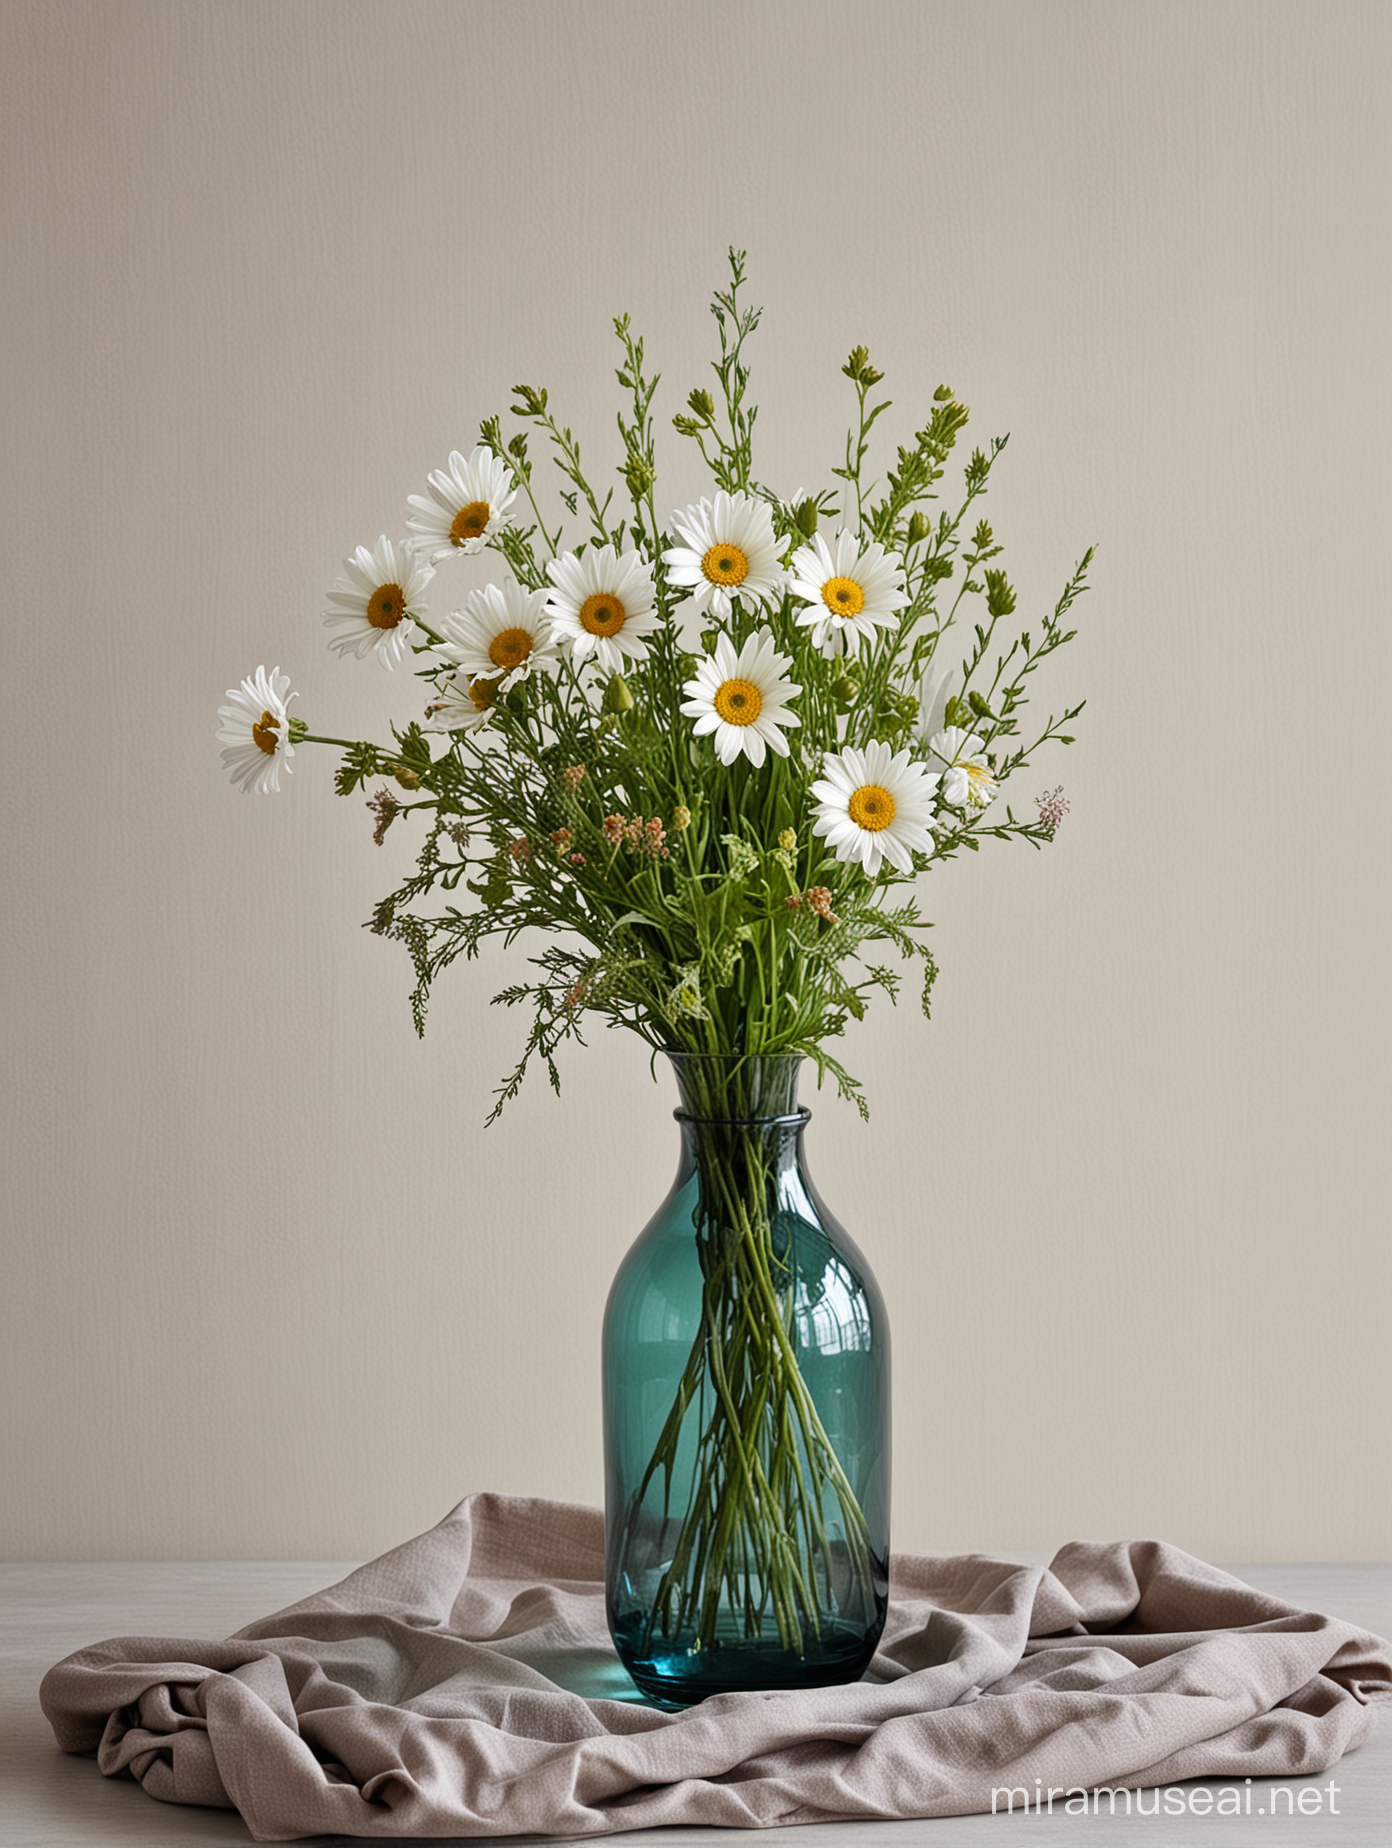 Stylish Decorative Daisy Arrangement in Multicolored Vase with Drapery